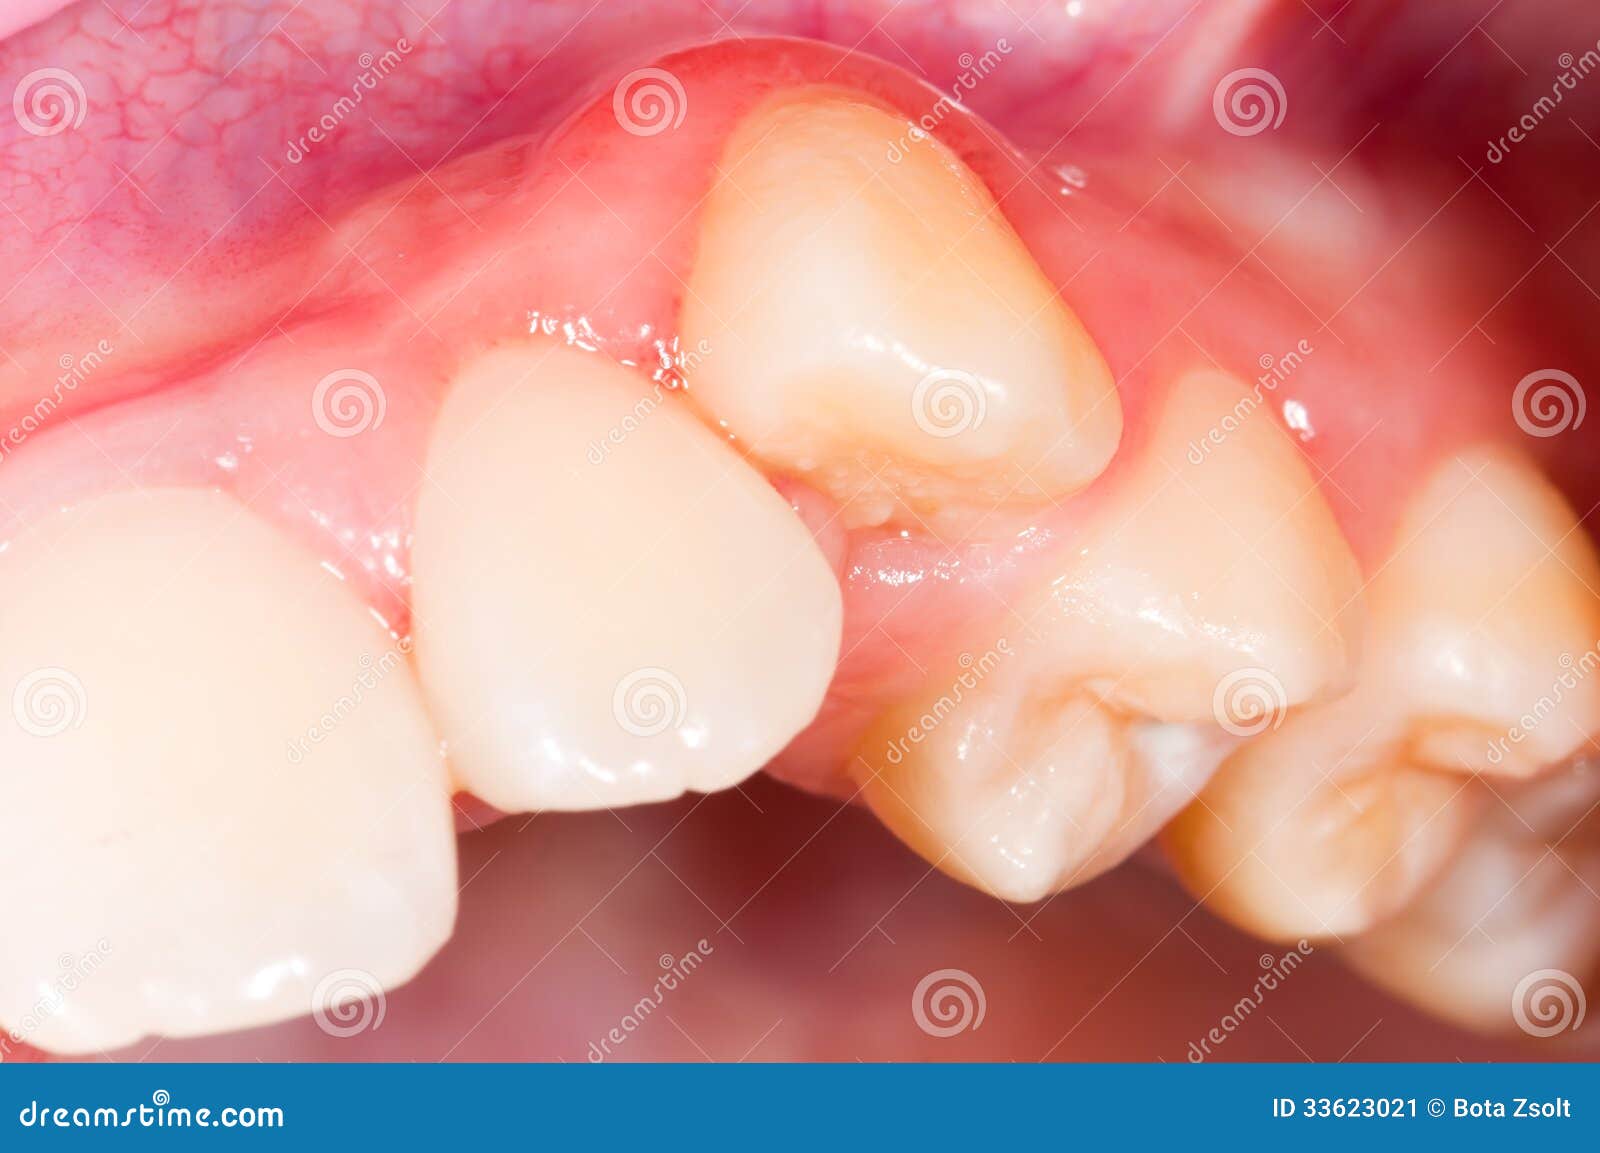 dental displacement